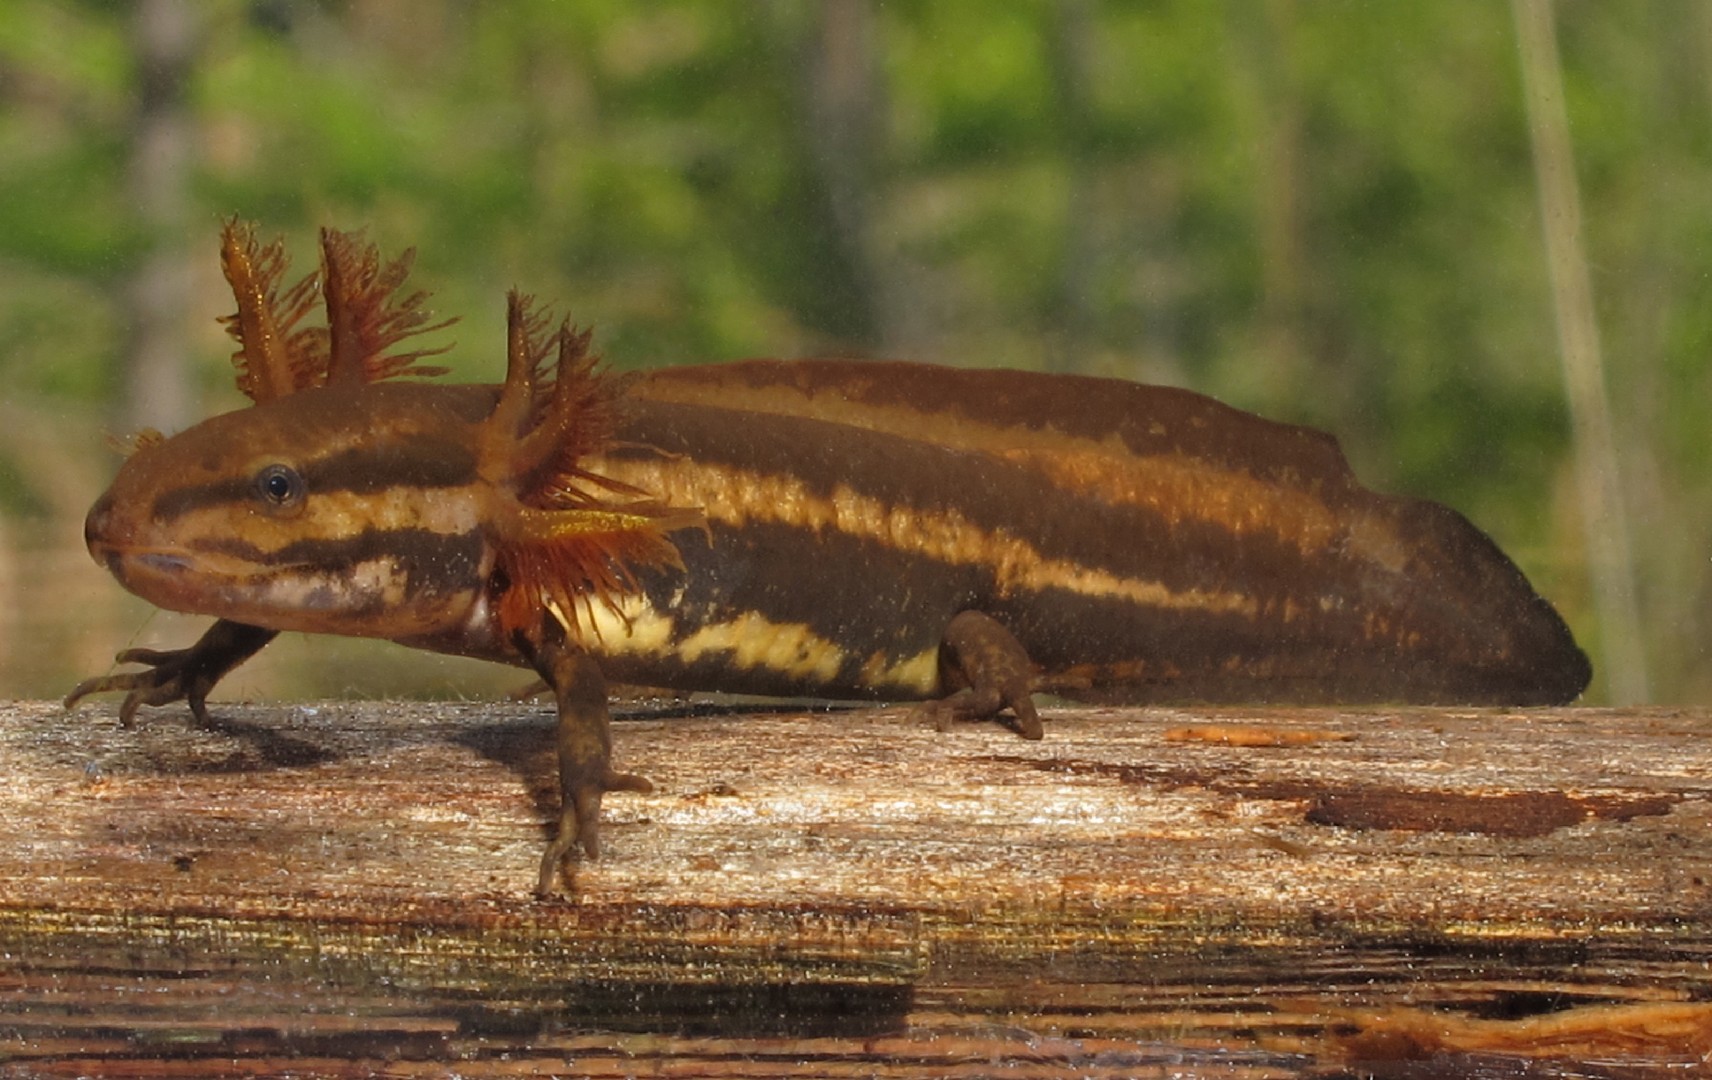 Frosted flatwoods salamander (Ambystoma cingulatum)